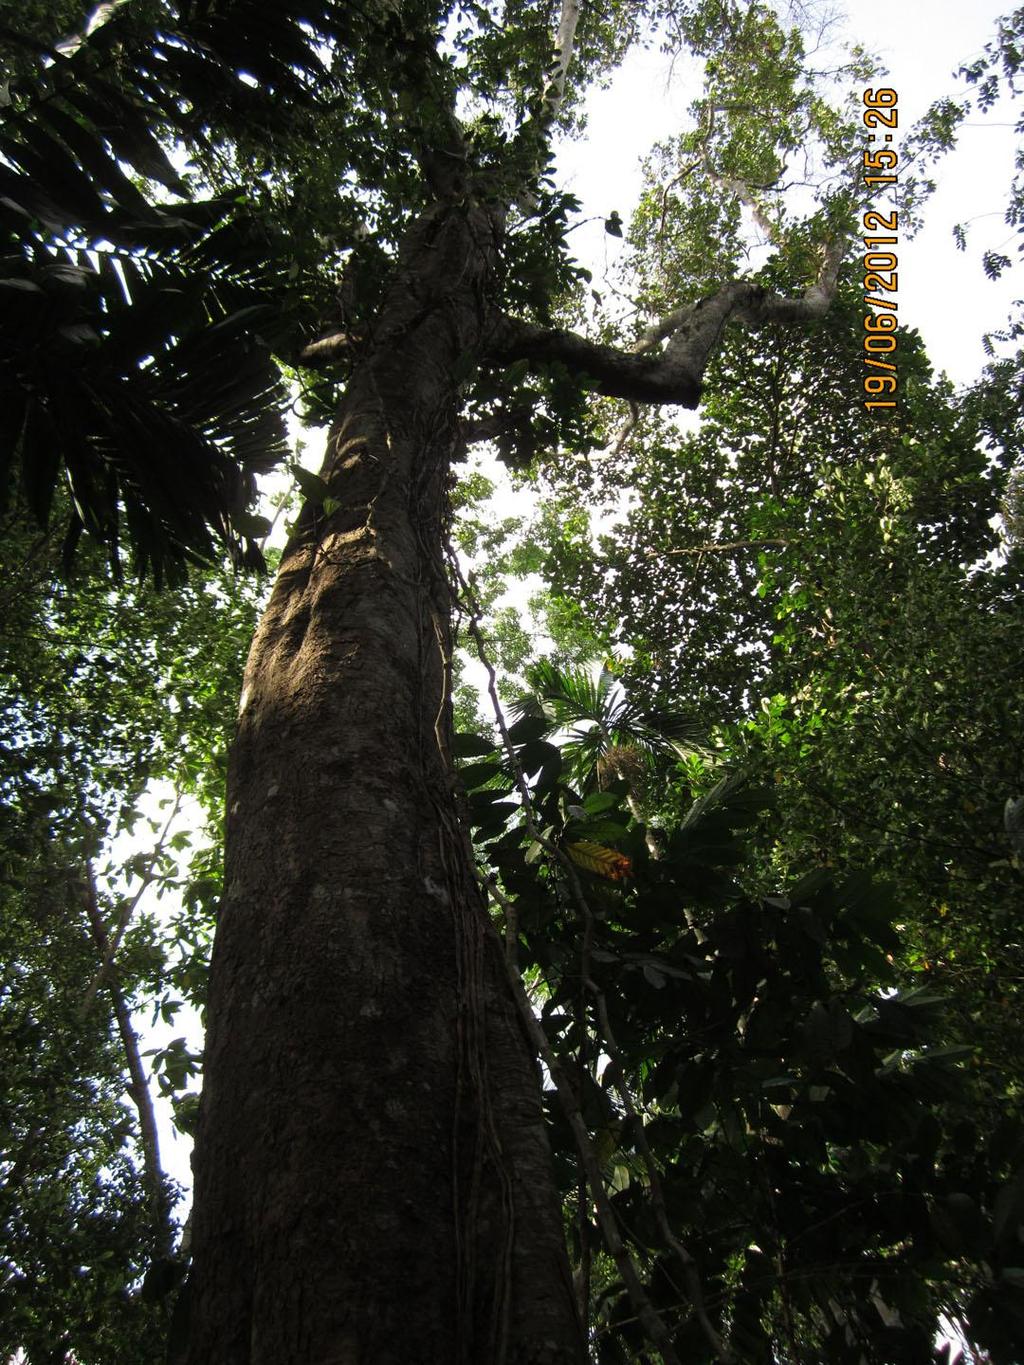 The Largest Cinnamon tree found in Sri Lanka Over 400